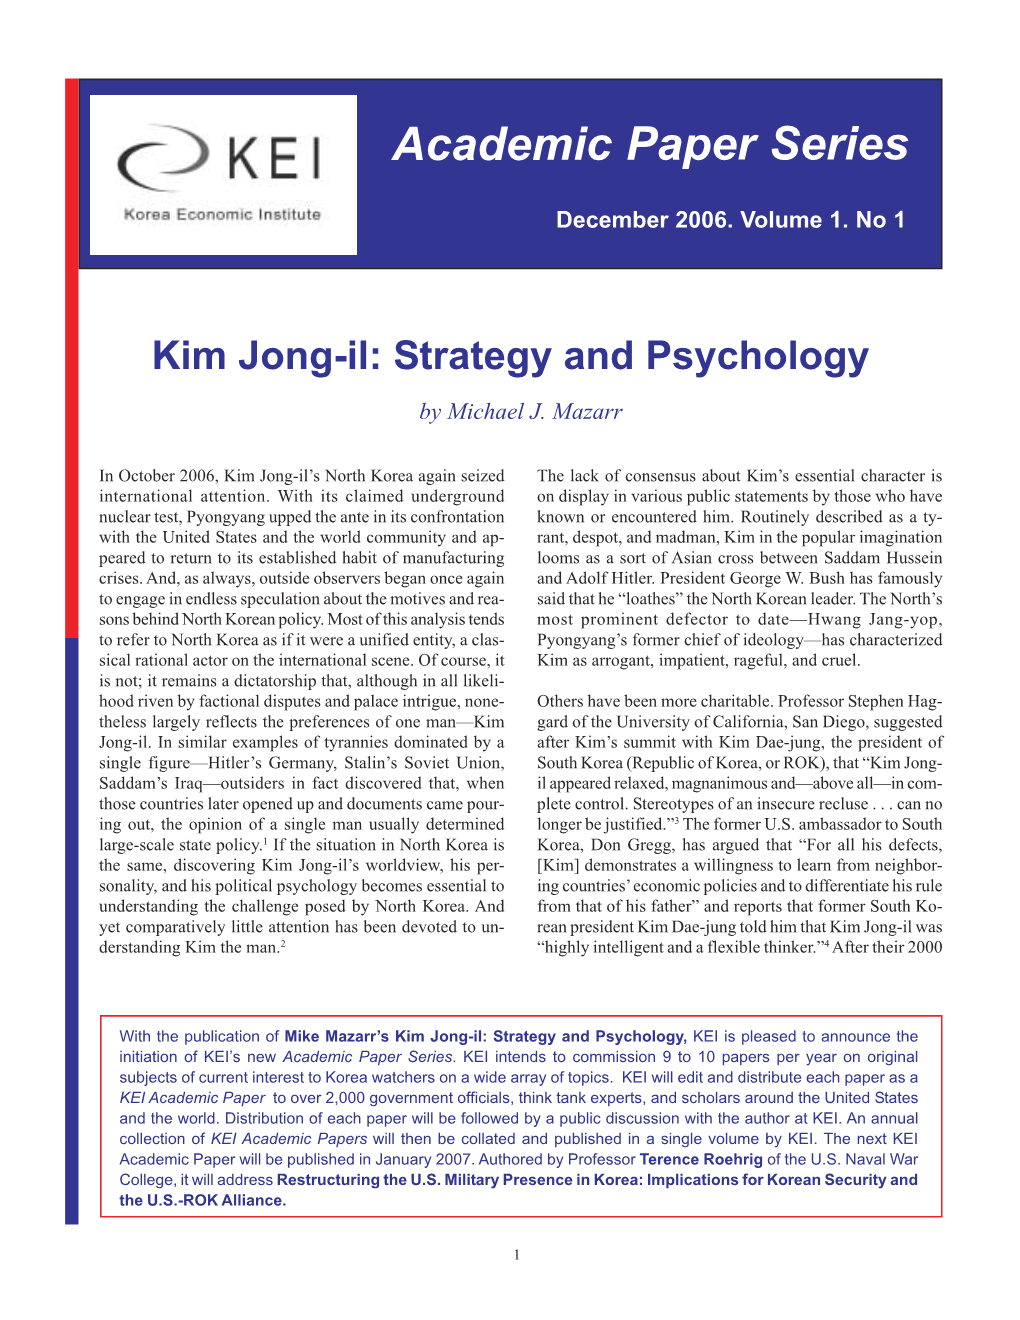 Kim Jong-Il: Strategy and Psychology by Michael J